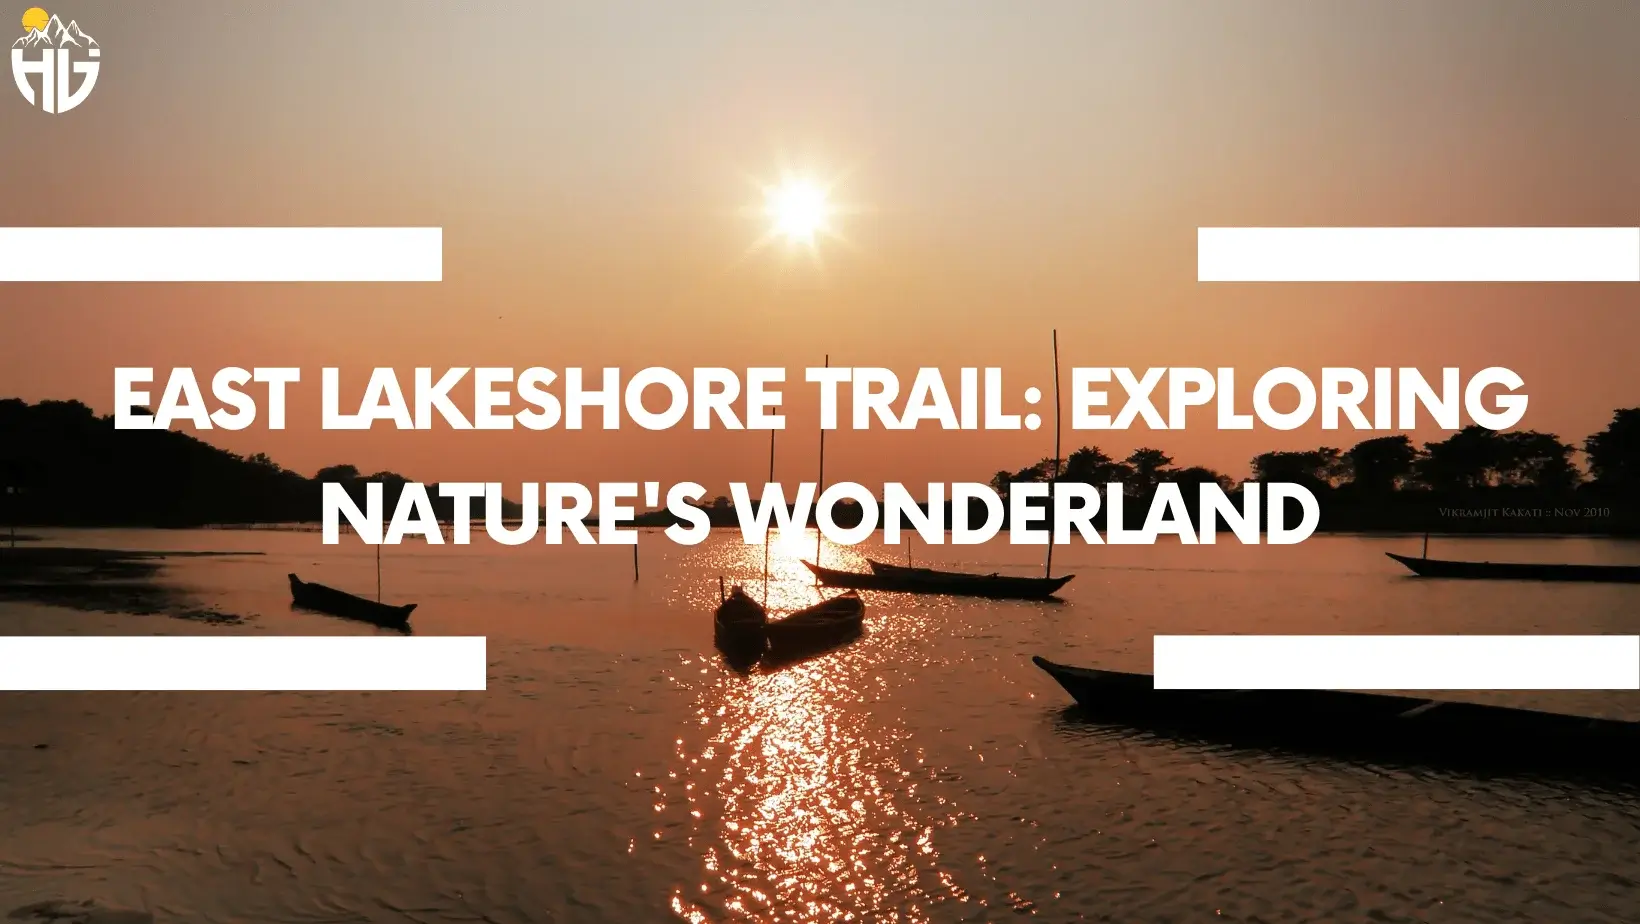 East Lakeshore Trail: Exploring Nature's Wonderland